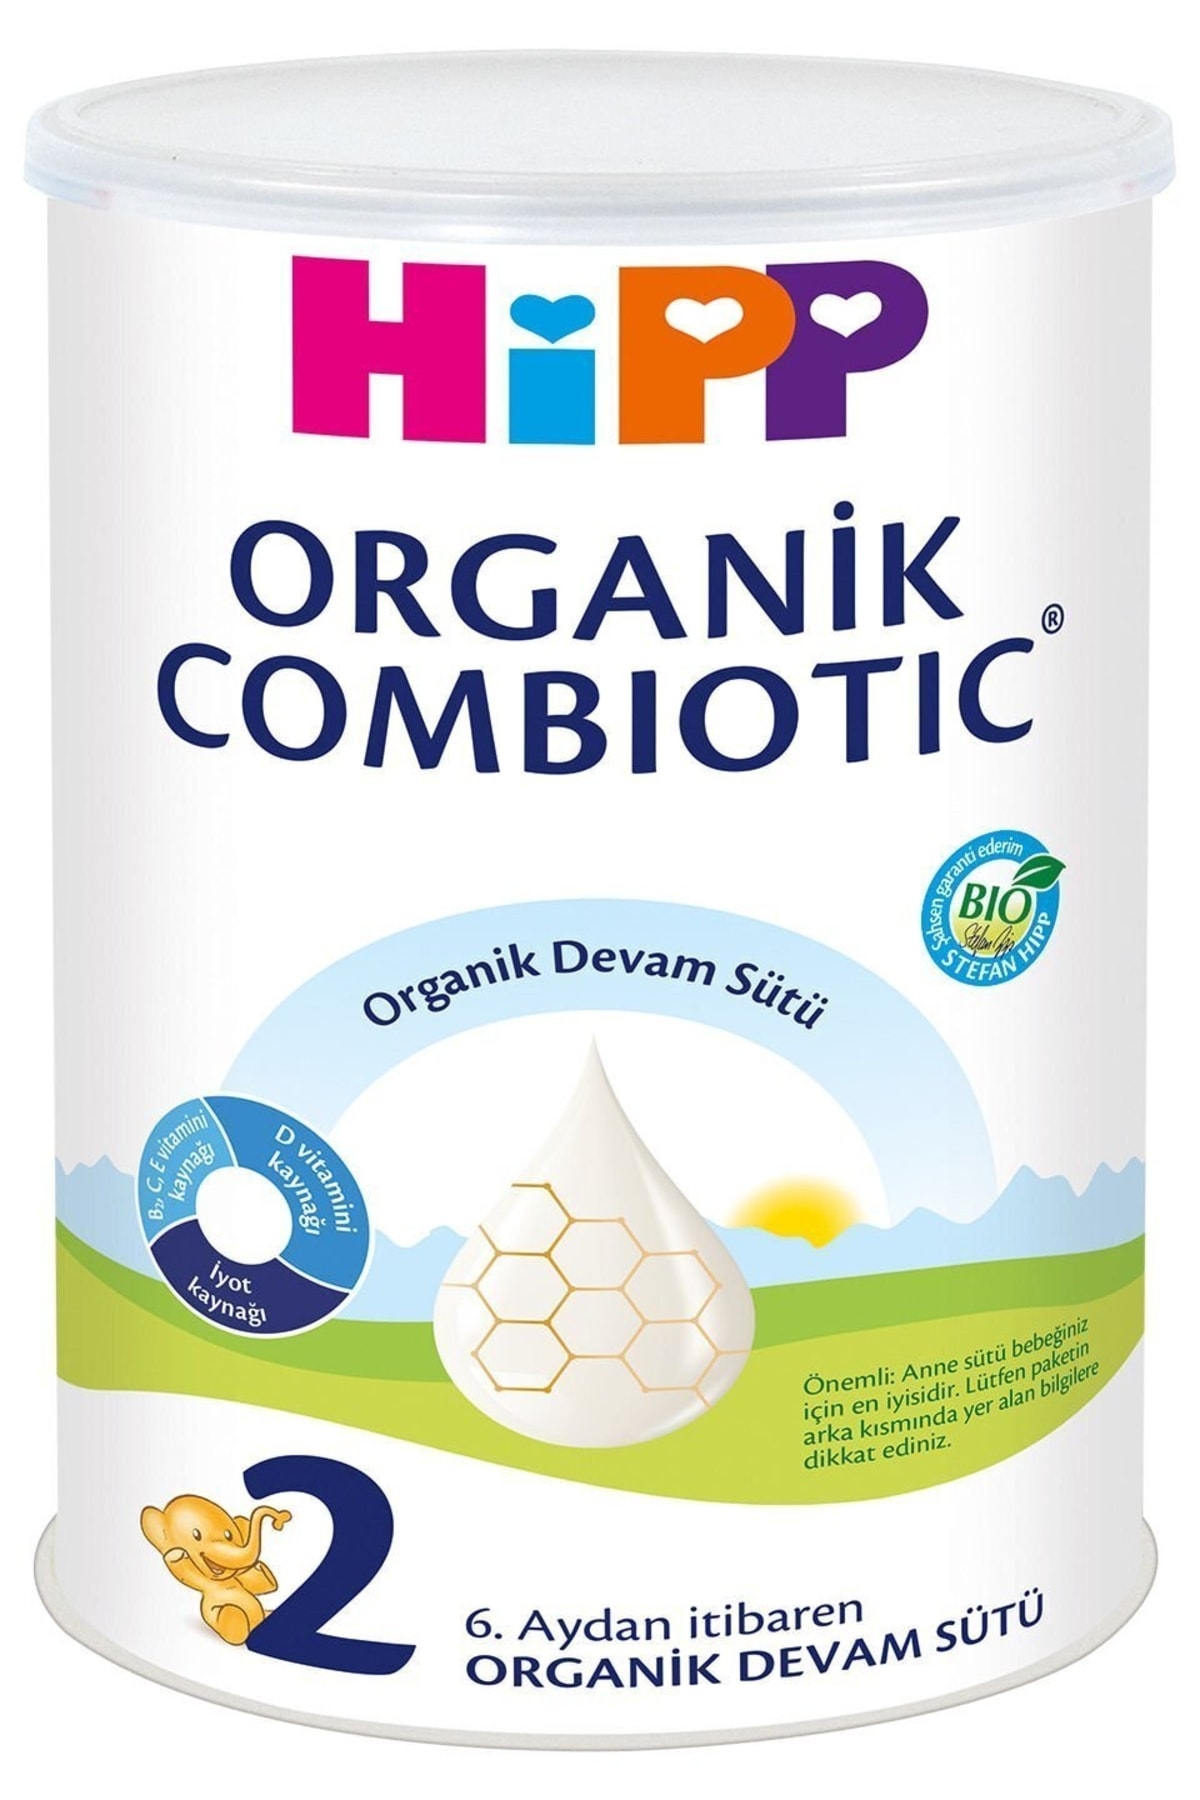 Hipp 2 Organik Combiotic Bebek Sütü 350gr